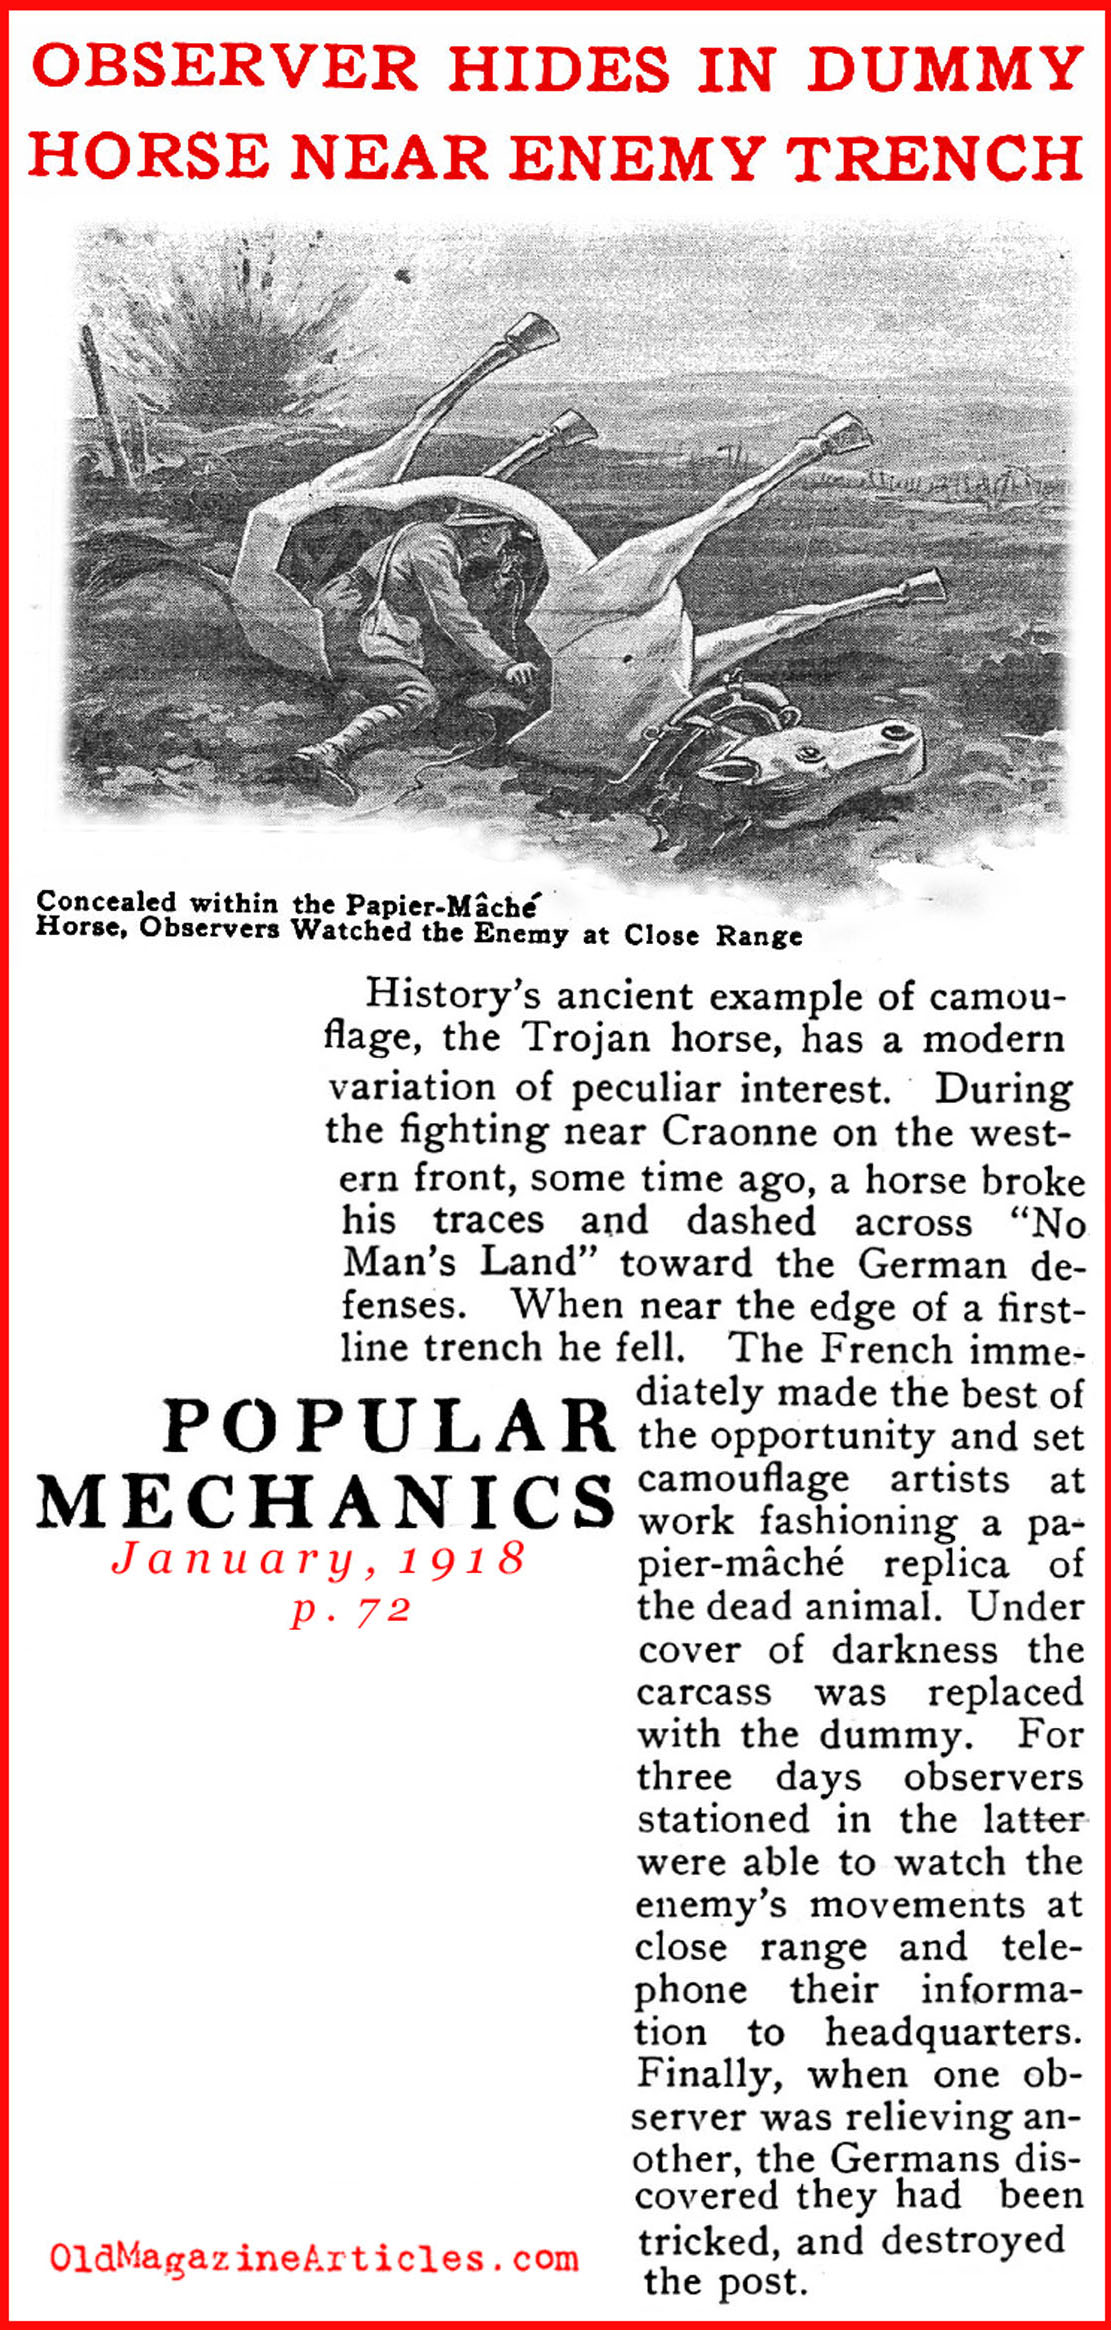 The Dummy Horse Observation Post (Popular Mechanics, 1918)